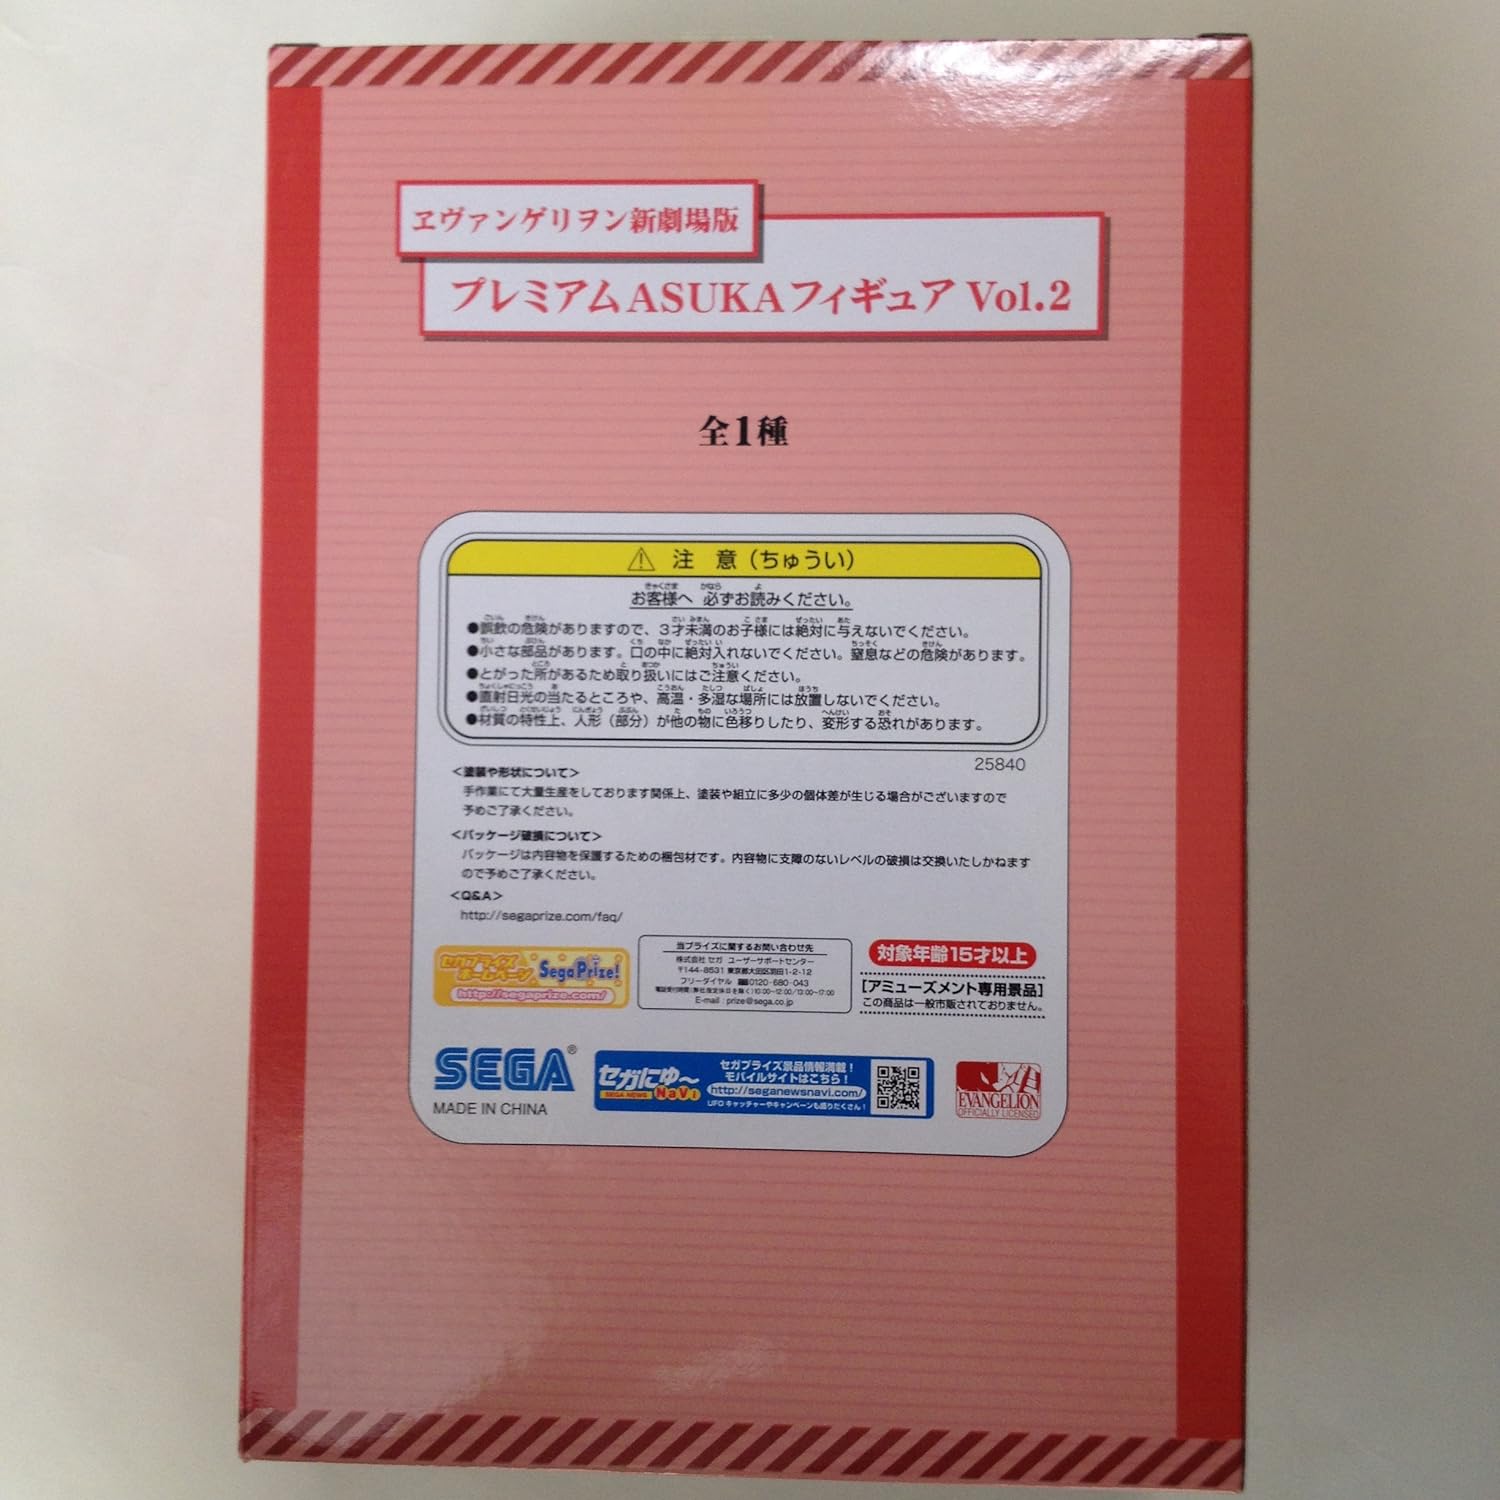 Sega Evangelion 3.0: You Can (Not) Redo: Asuka Langley Soryu Premium ASUKA Figure Volume 2